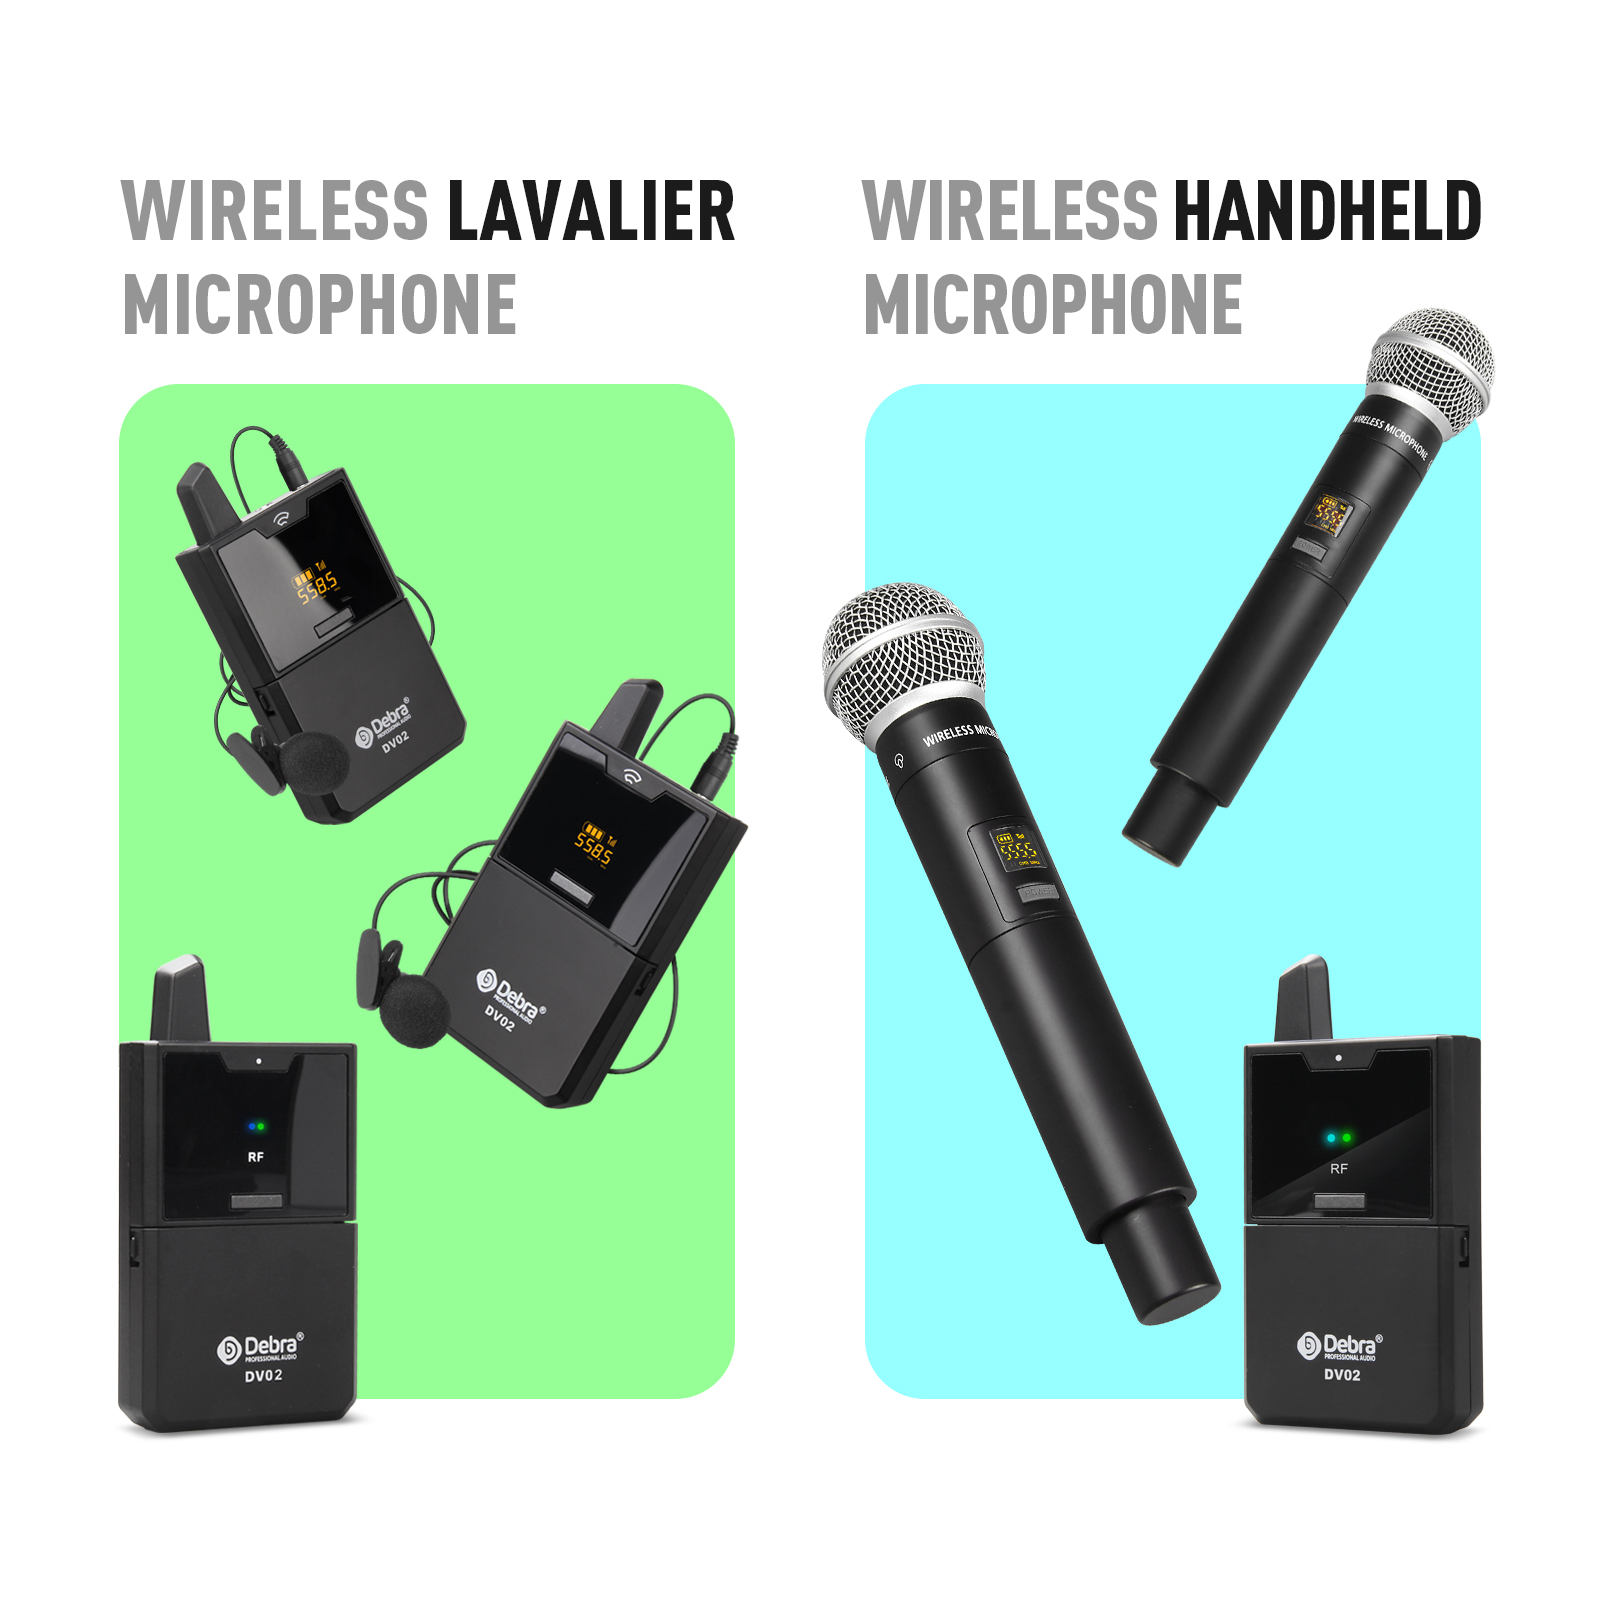 DV02 DSLR camera/Smartphone wireless recording microphone（Handheld Microphone）